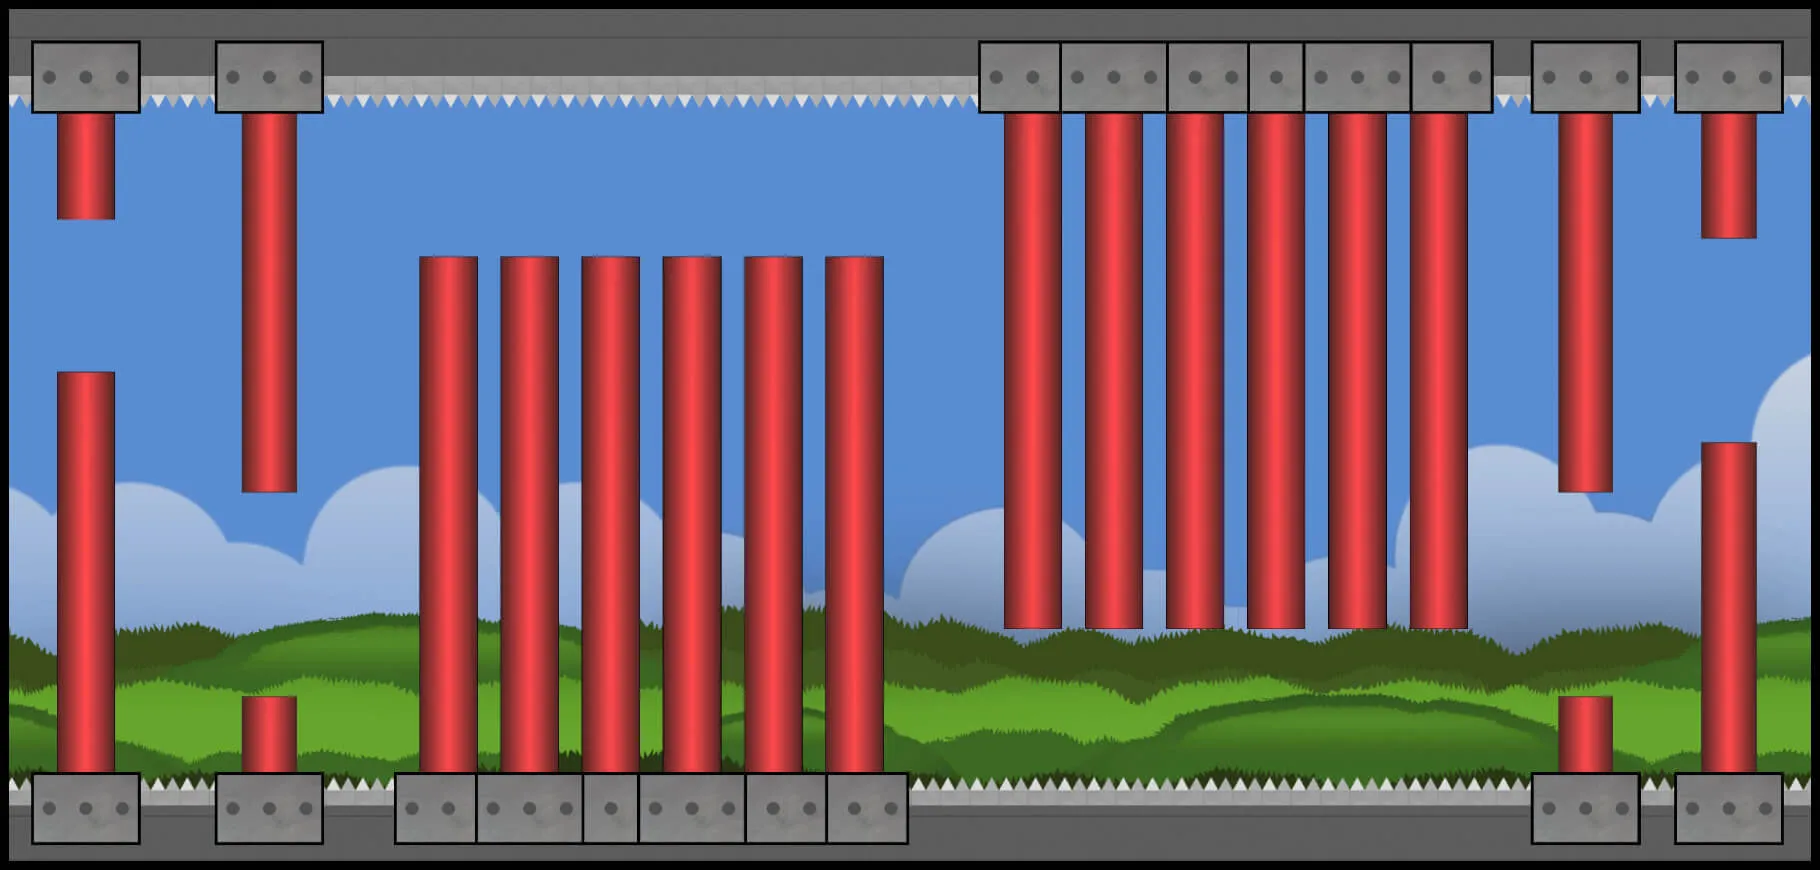 machined level screenshot from the steam game reflex runner.